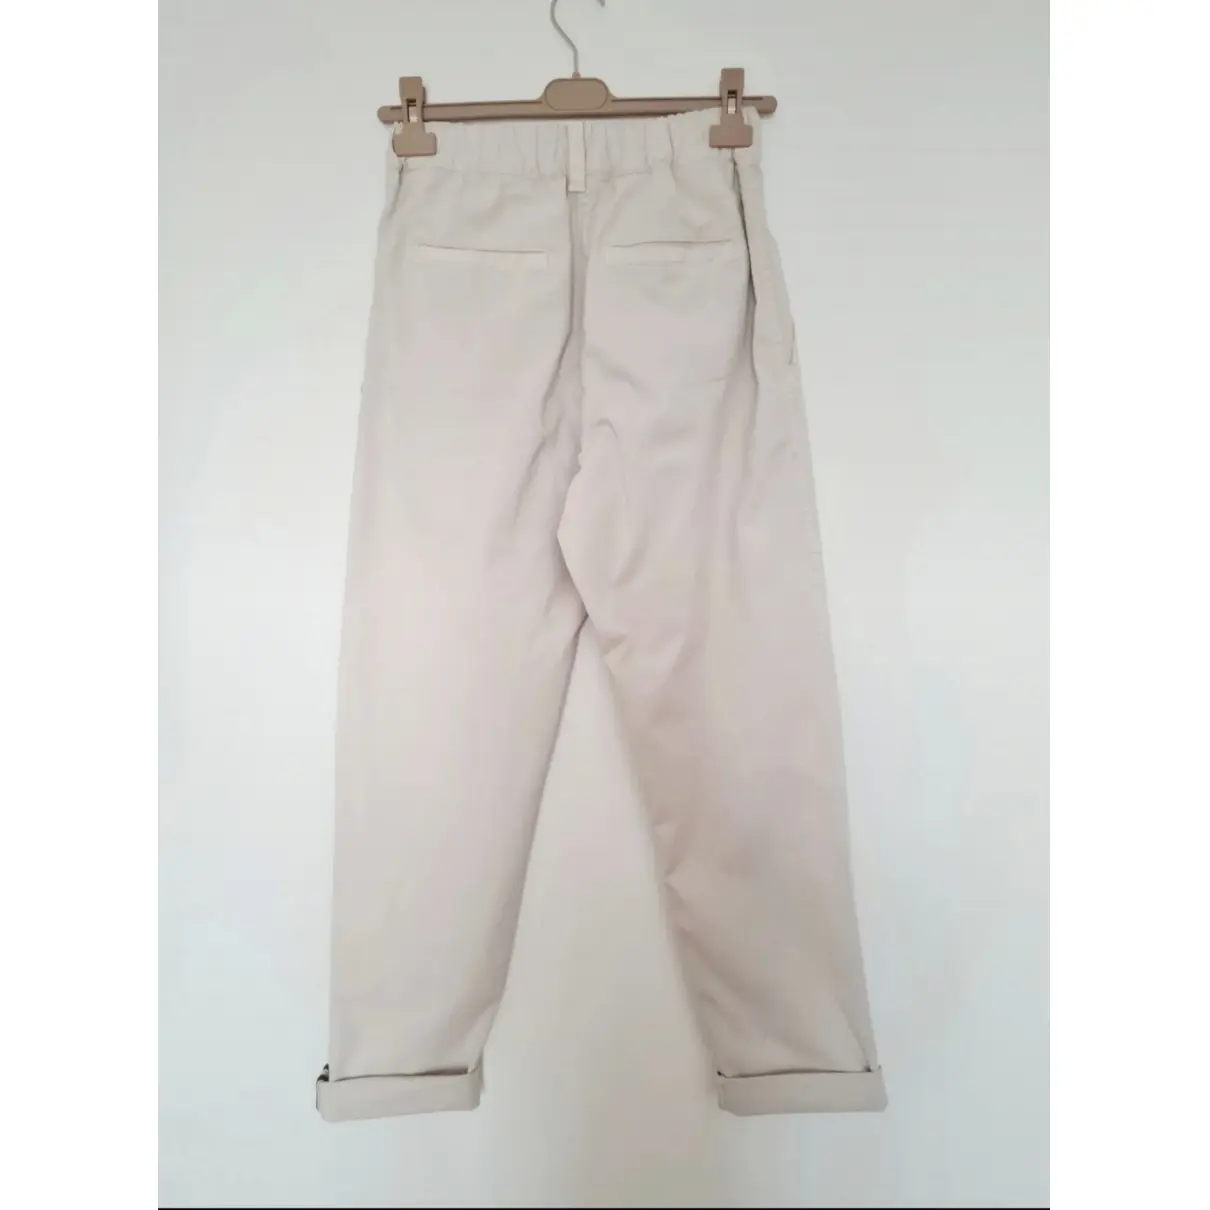 Buy Brunello Cucinelli Carot pants online